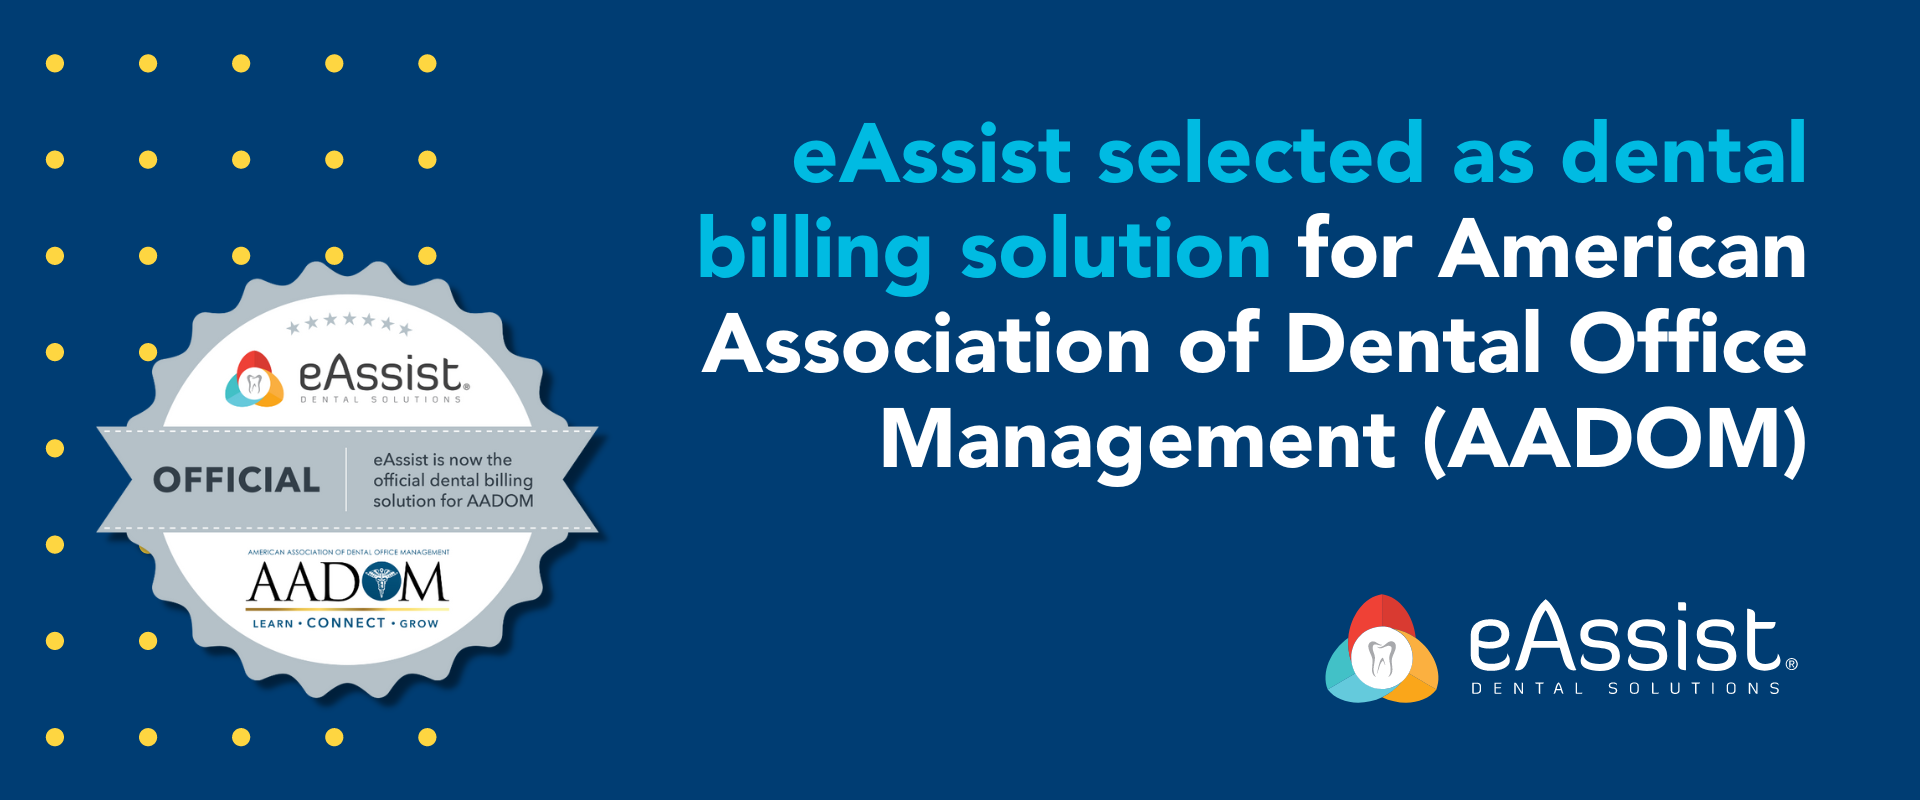 eAssist selected as dental billing solution for American Association of Dental Office Management (AADOM)